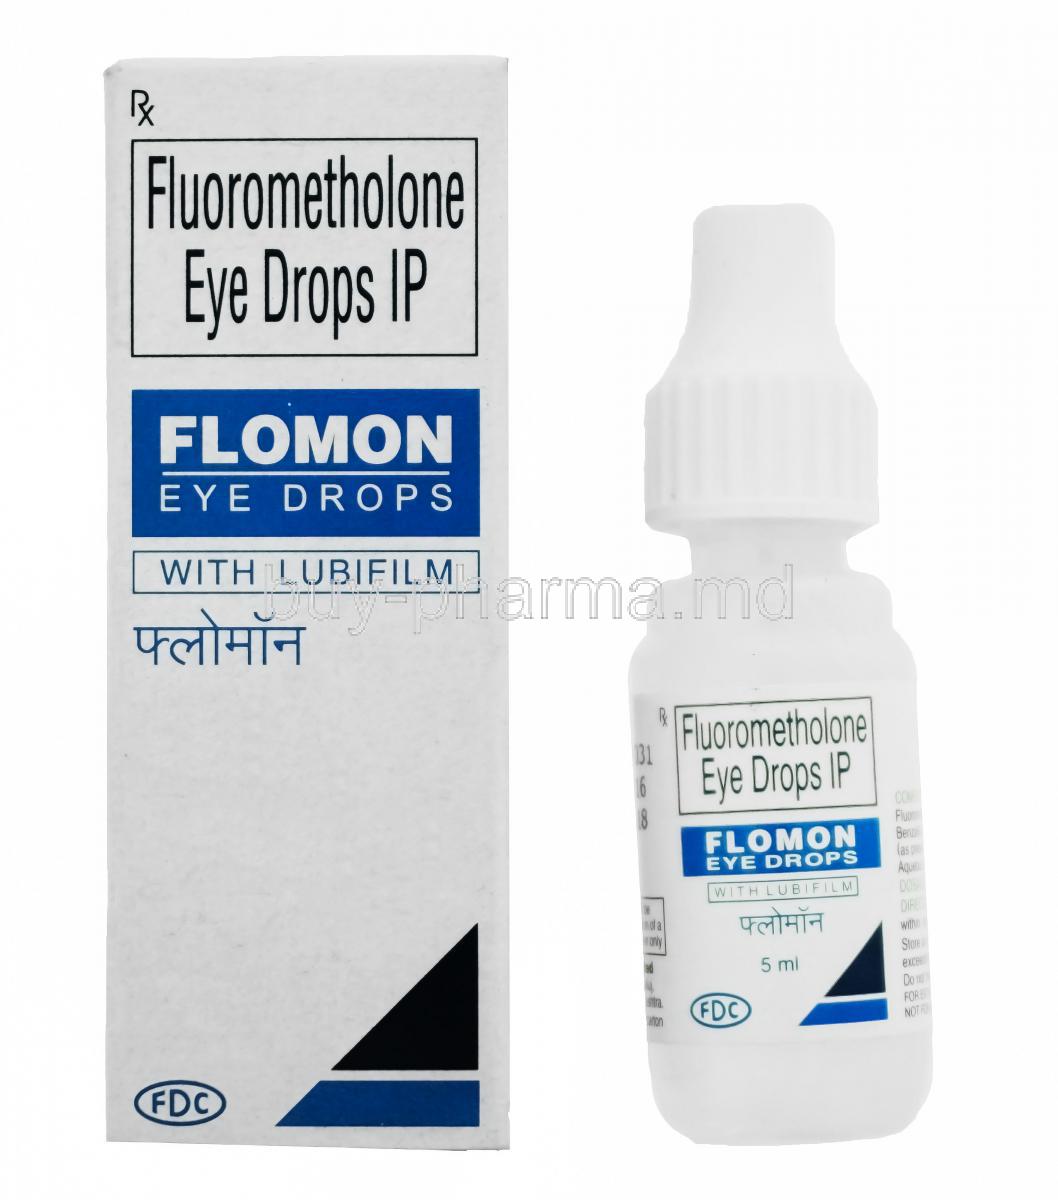 Fluorometholone Eye Drops, With Lubifilm, 5ml, Box and bottle front presentation, FDC